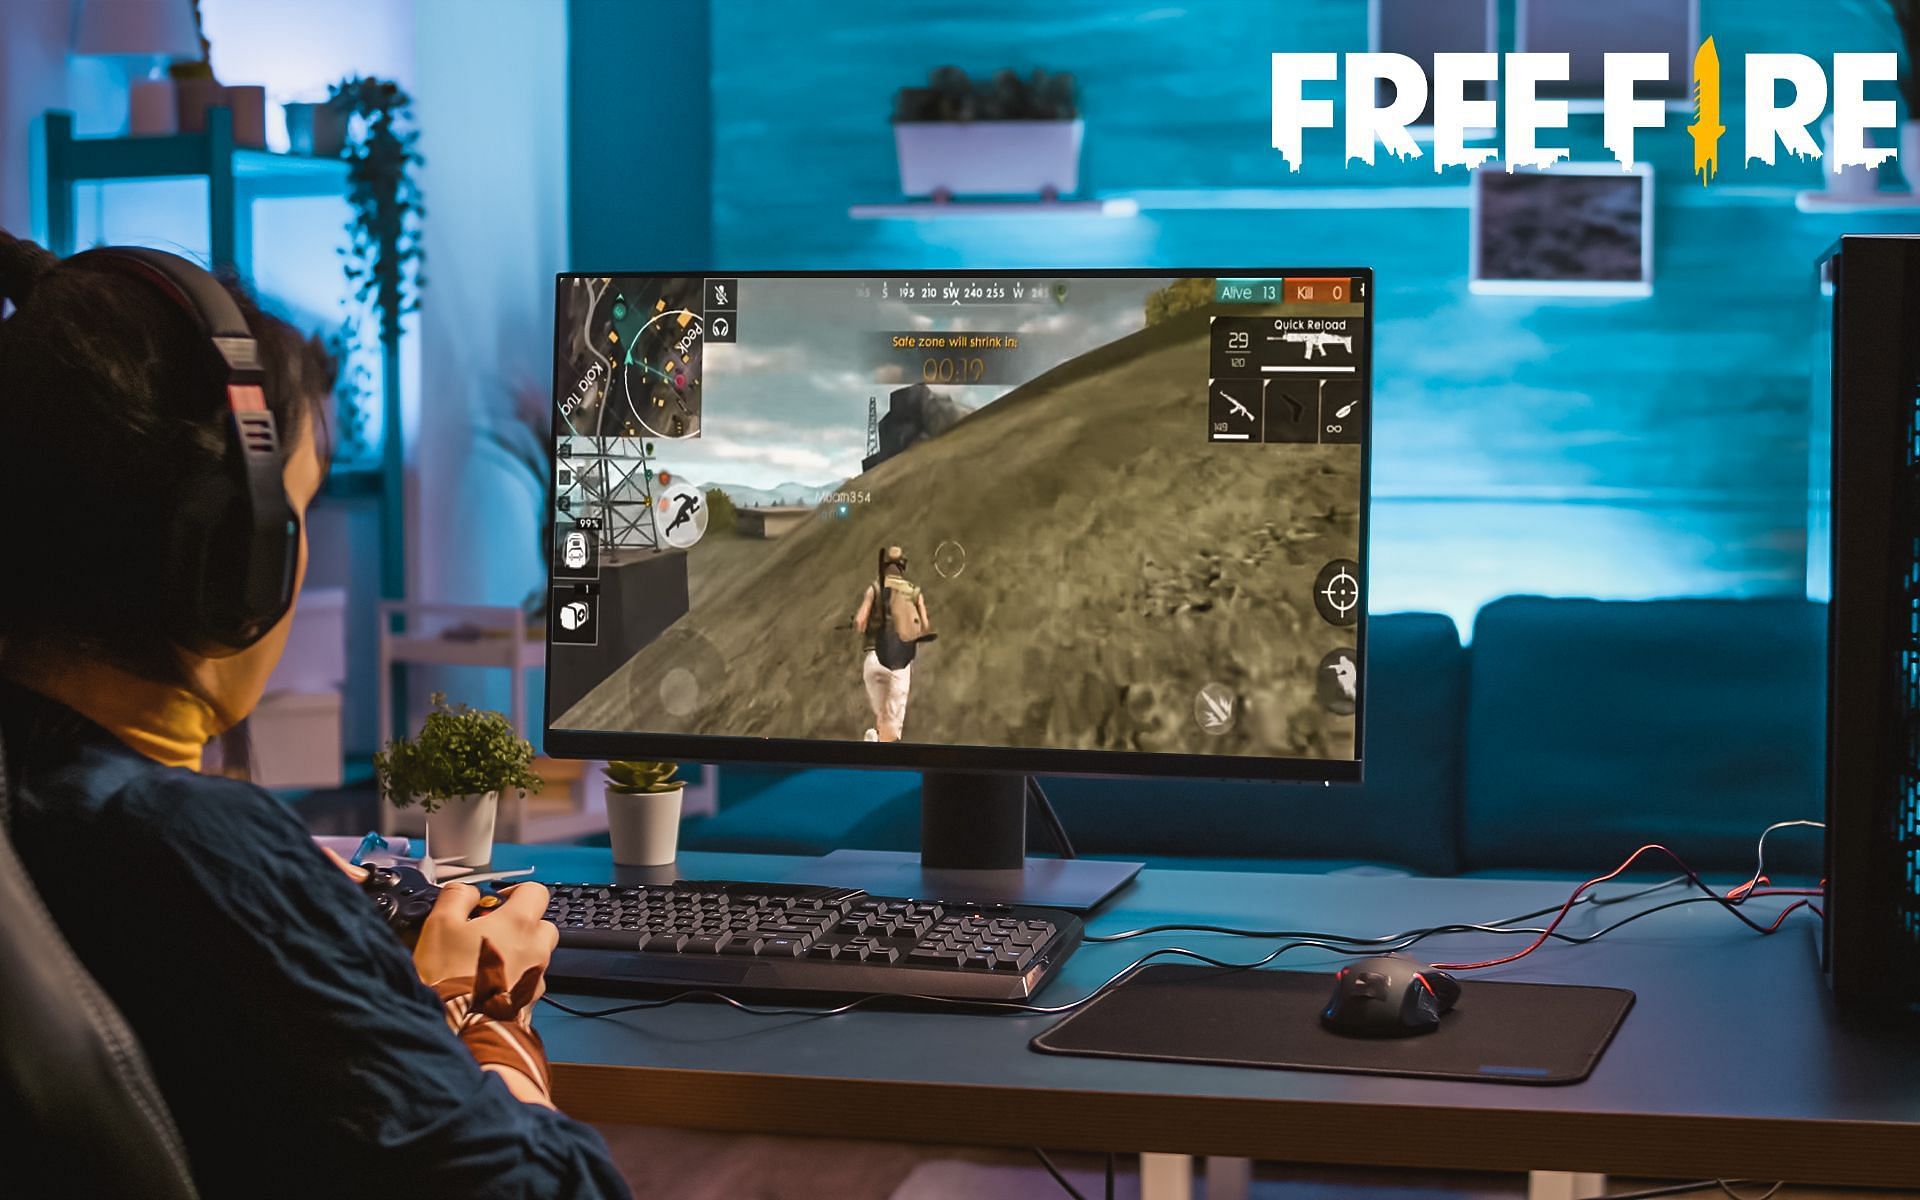 Users can enjoy Free Fire through emulators (Image via Sportskeeda)